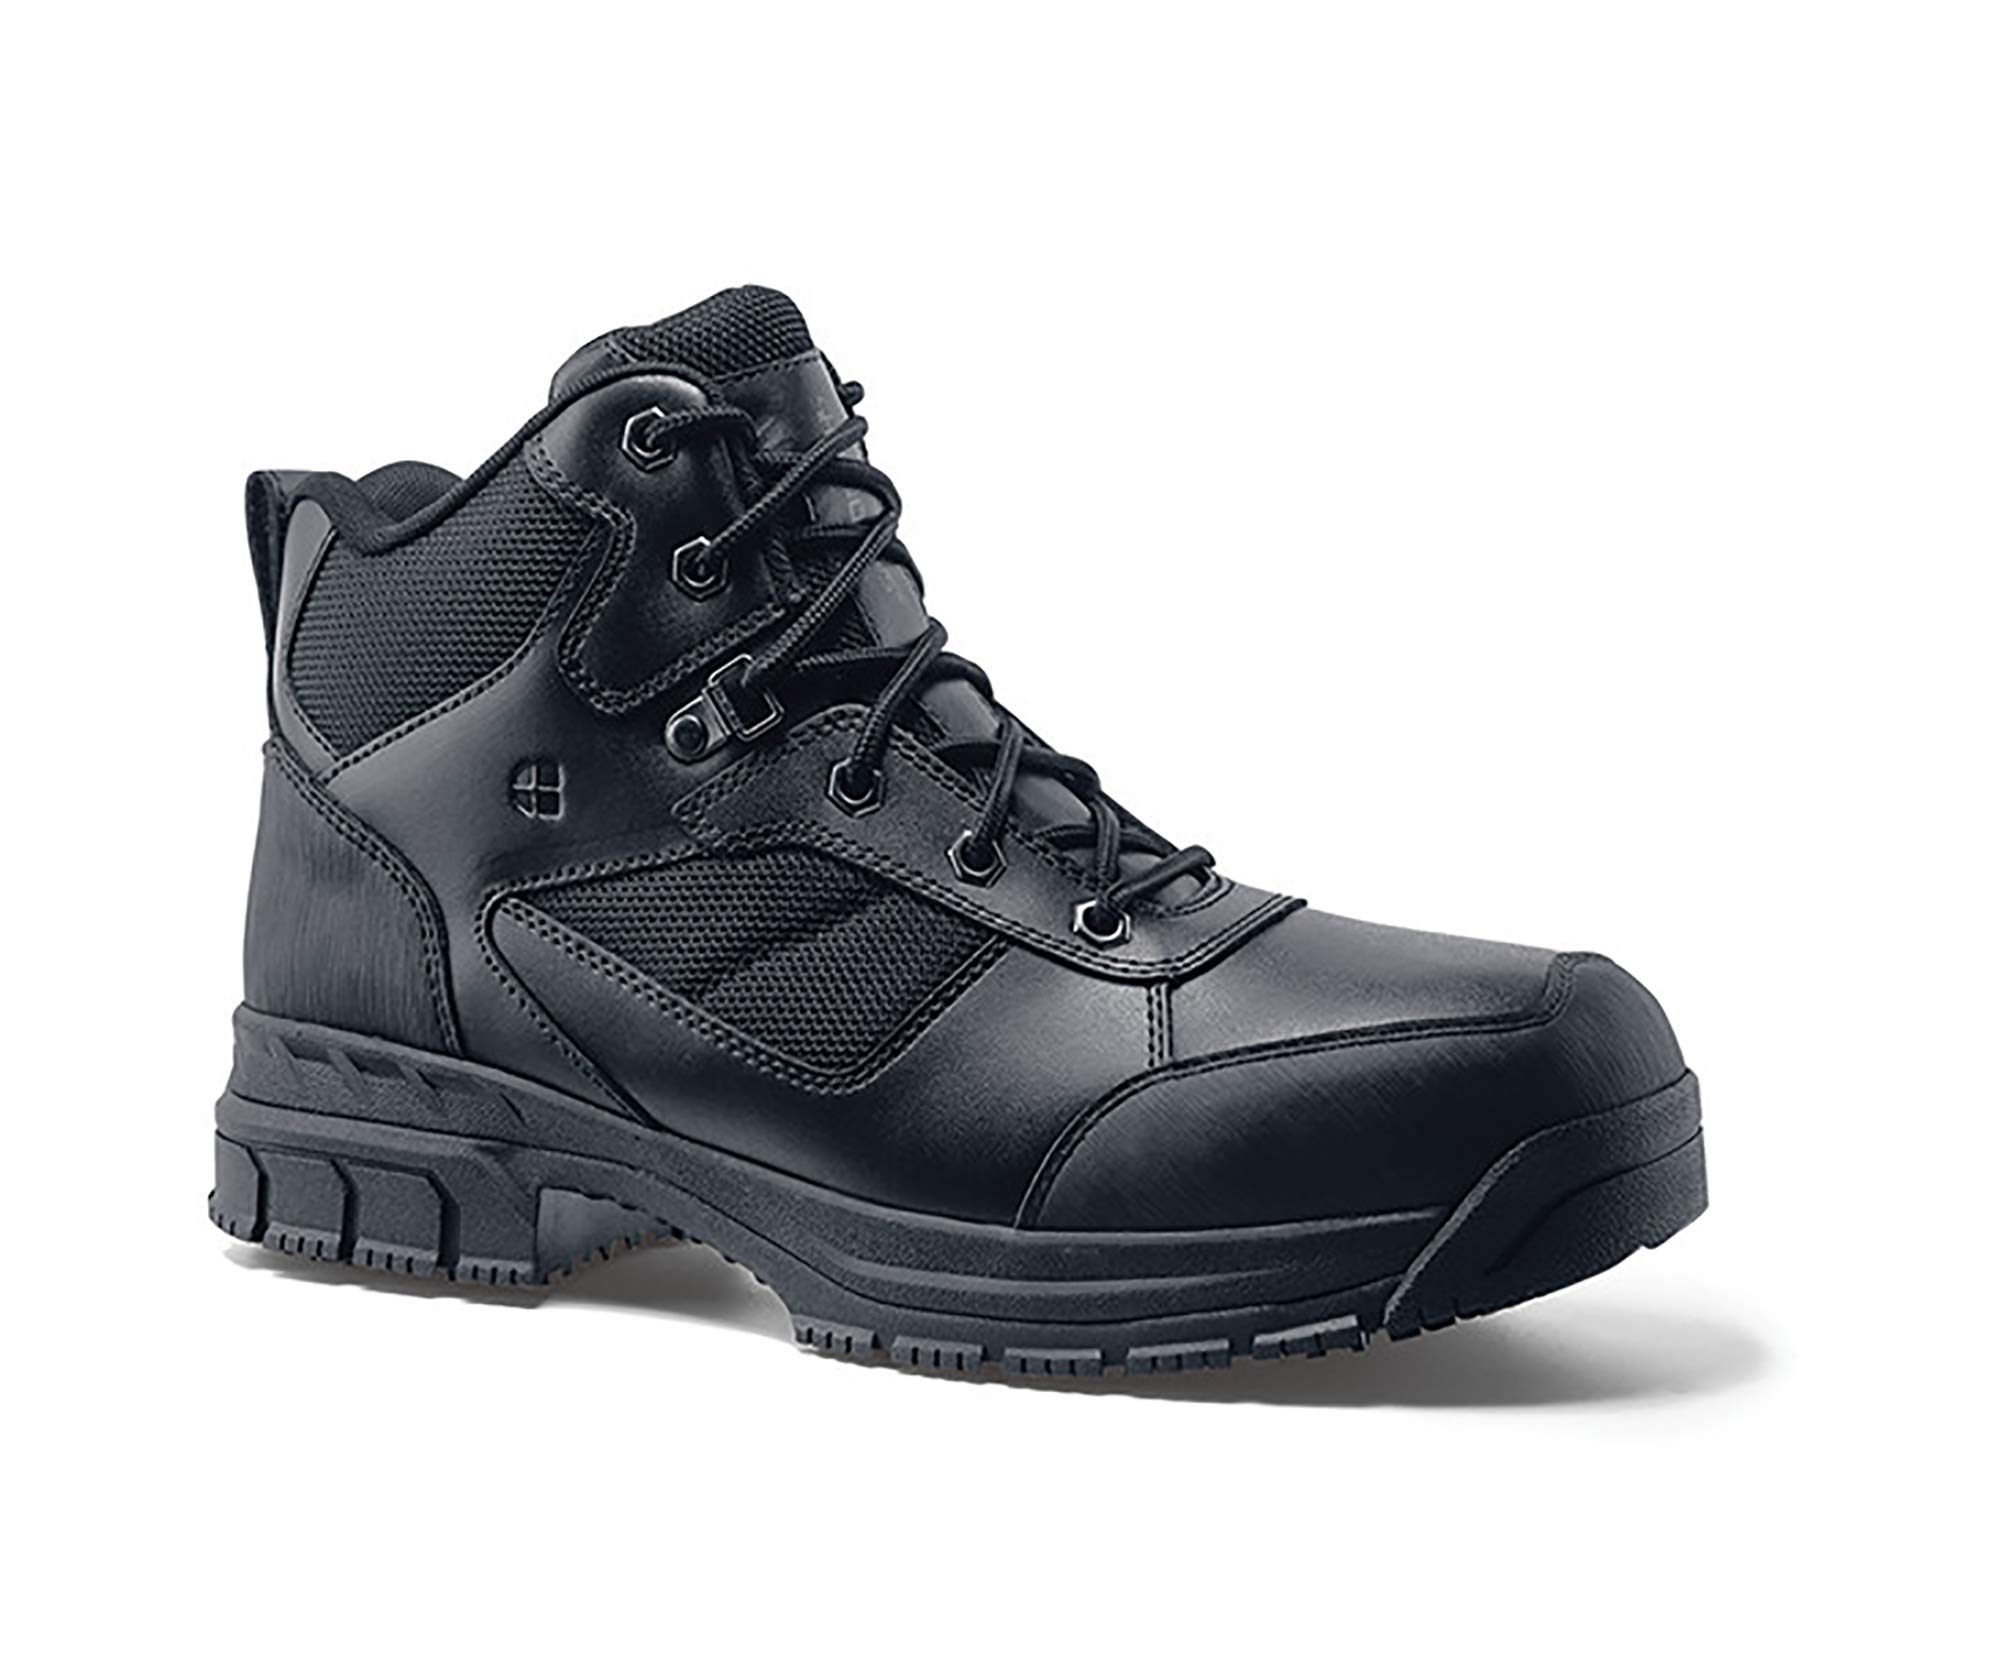 Shoes for Crews Voyager II, Men's, Women's, Unisex Steel Toe (ST) Work Boots, Slip Resistant, Water Resistant, Black